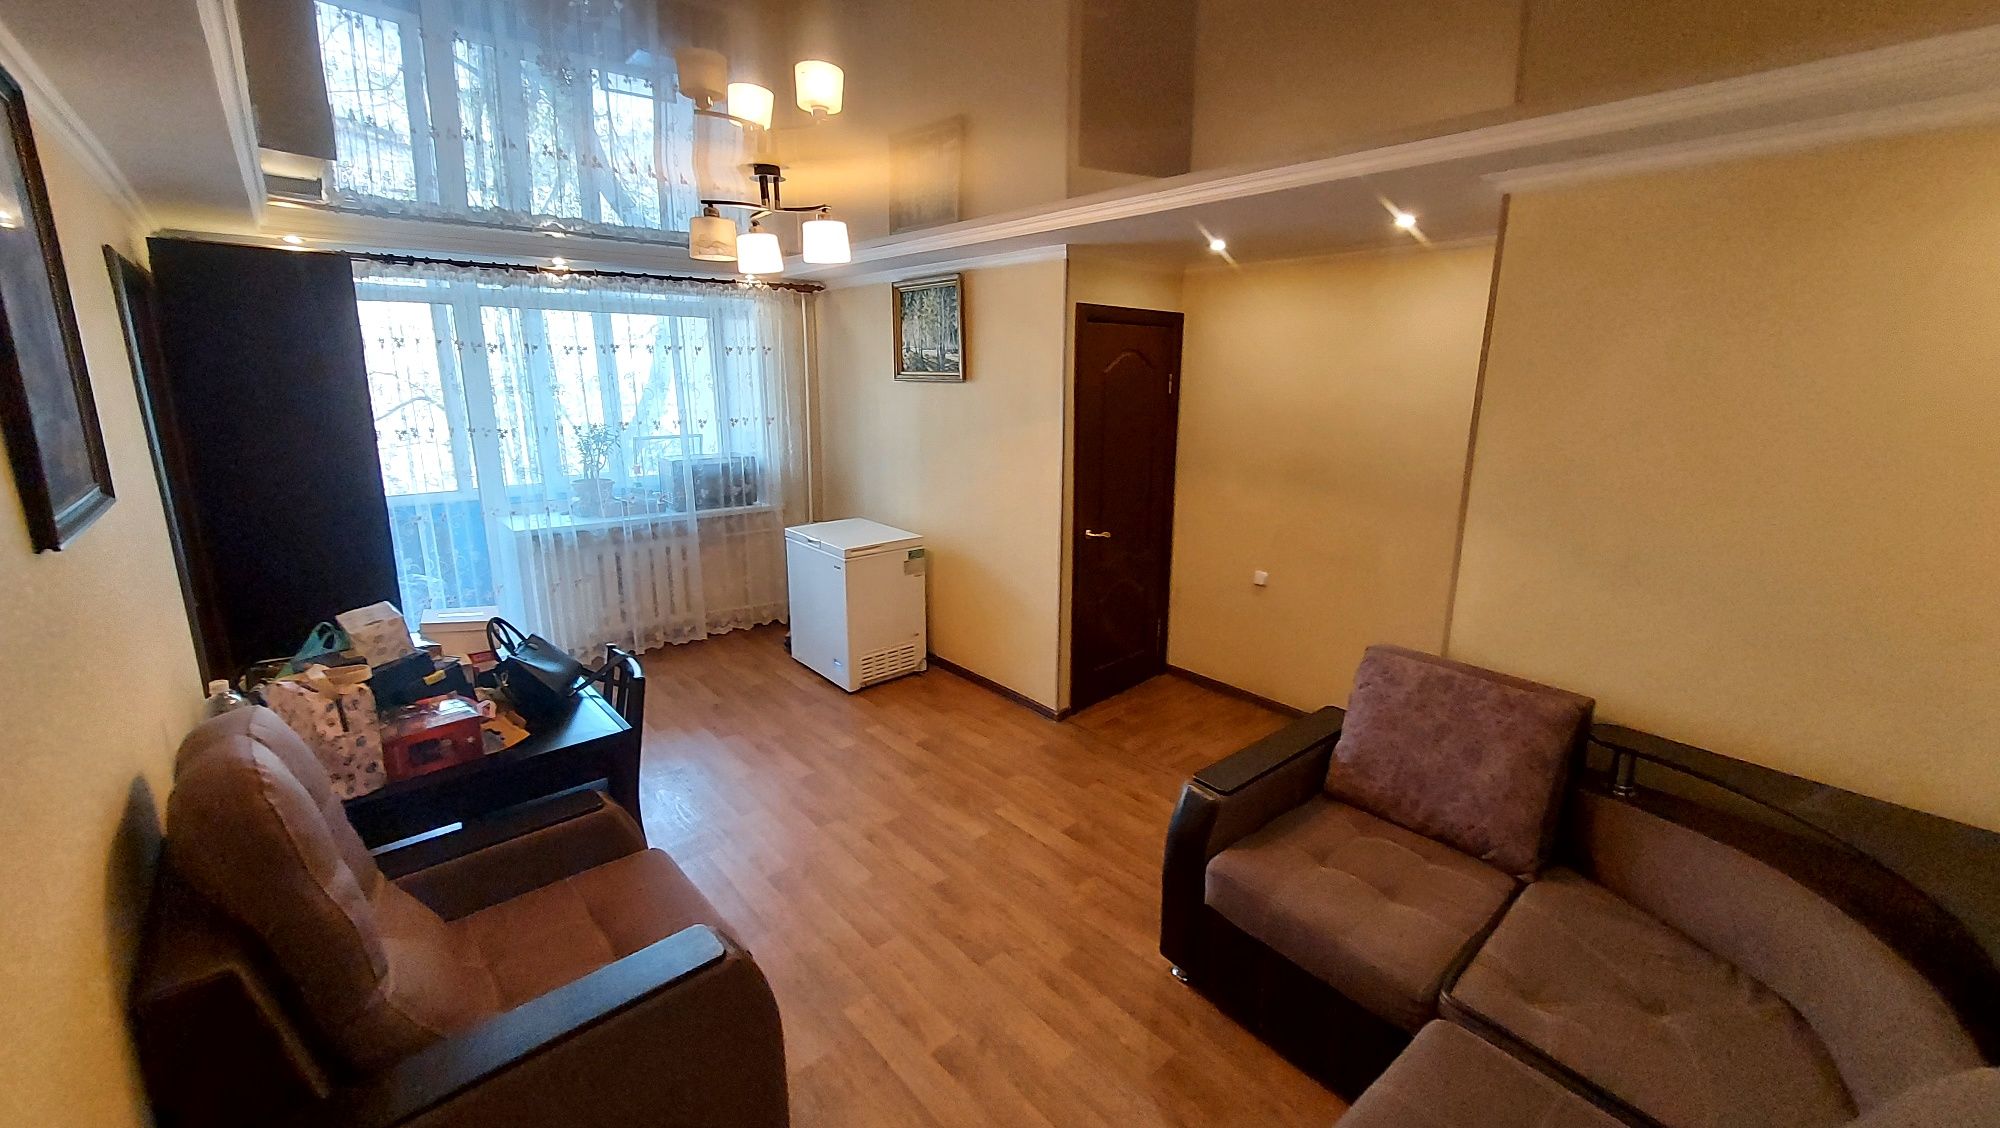 продам 3х комнатную квартиру в городе Абдирова 54